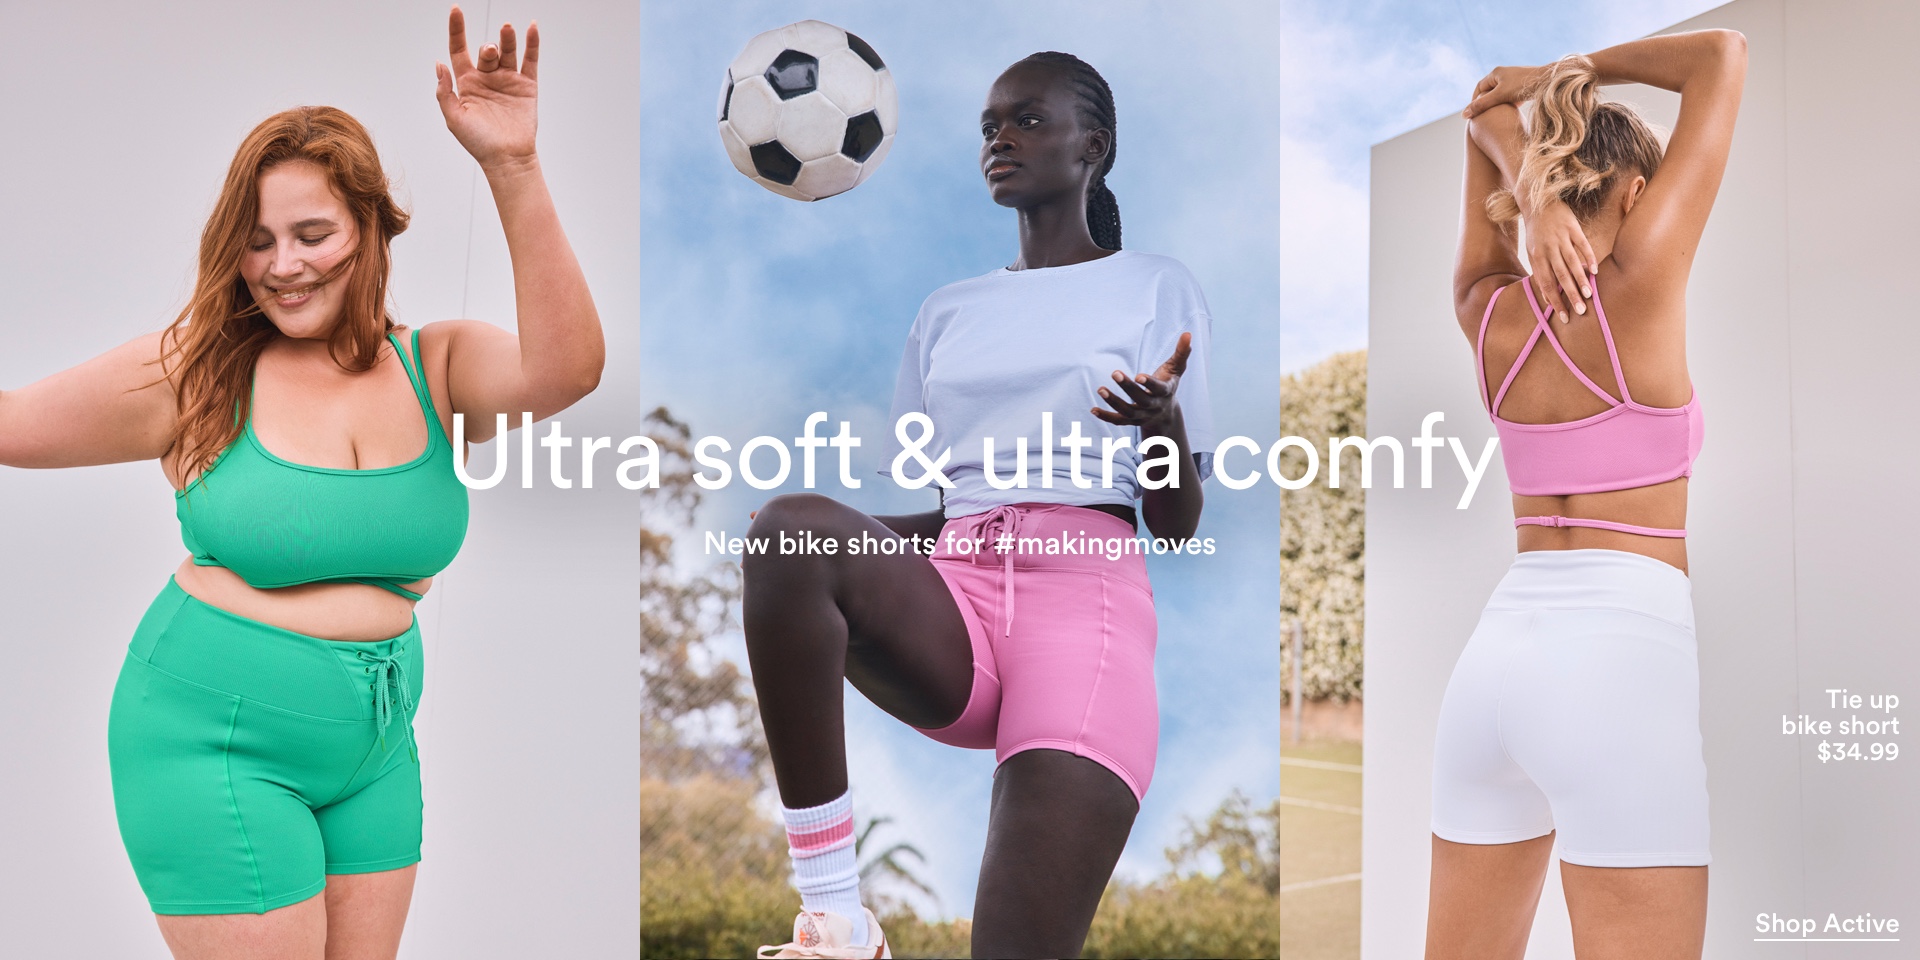 Ultra soft & ultra comfy. New bike shorts for #makingmoves. Shop activewear.